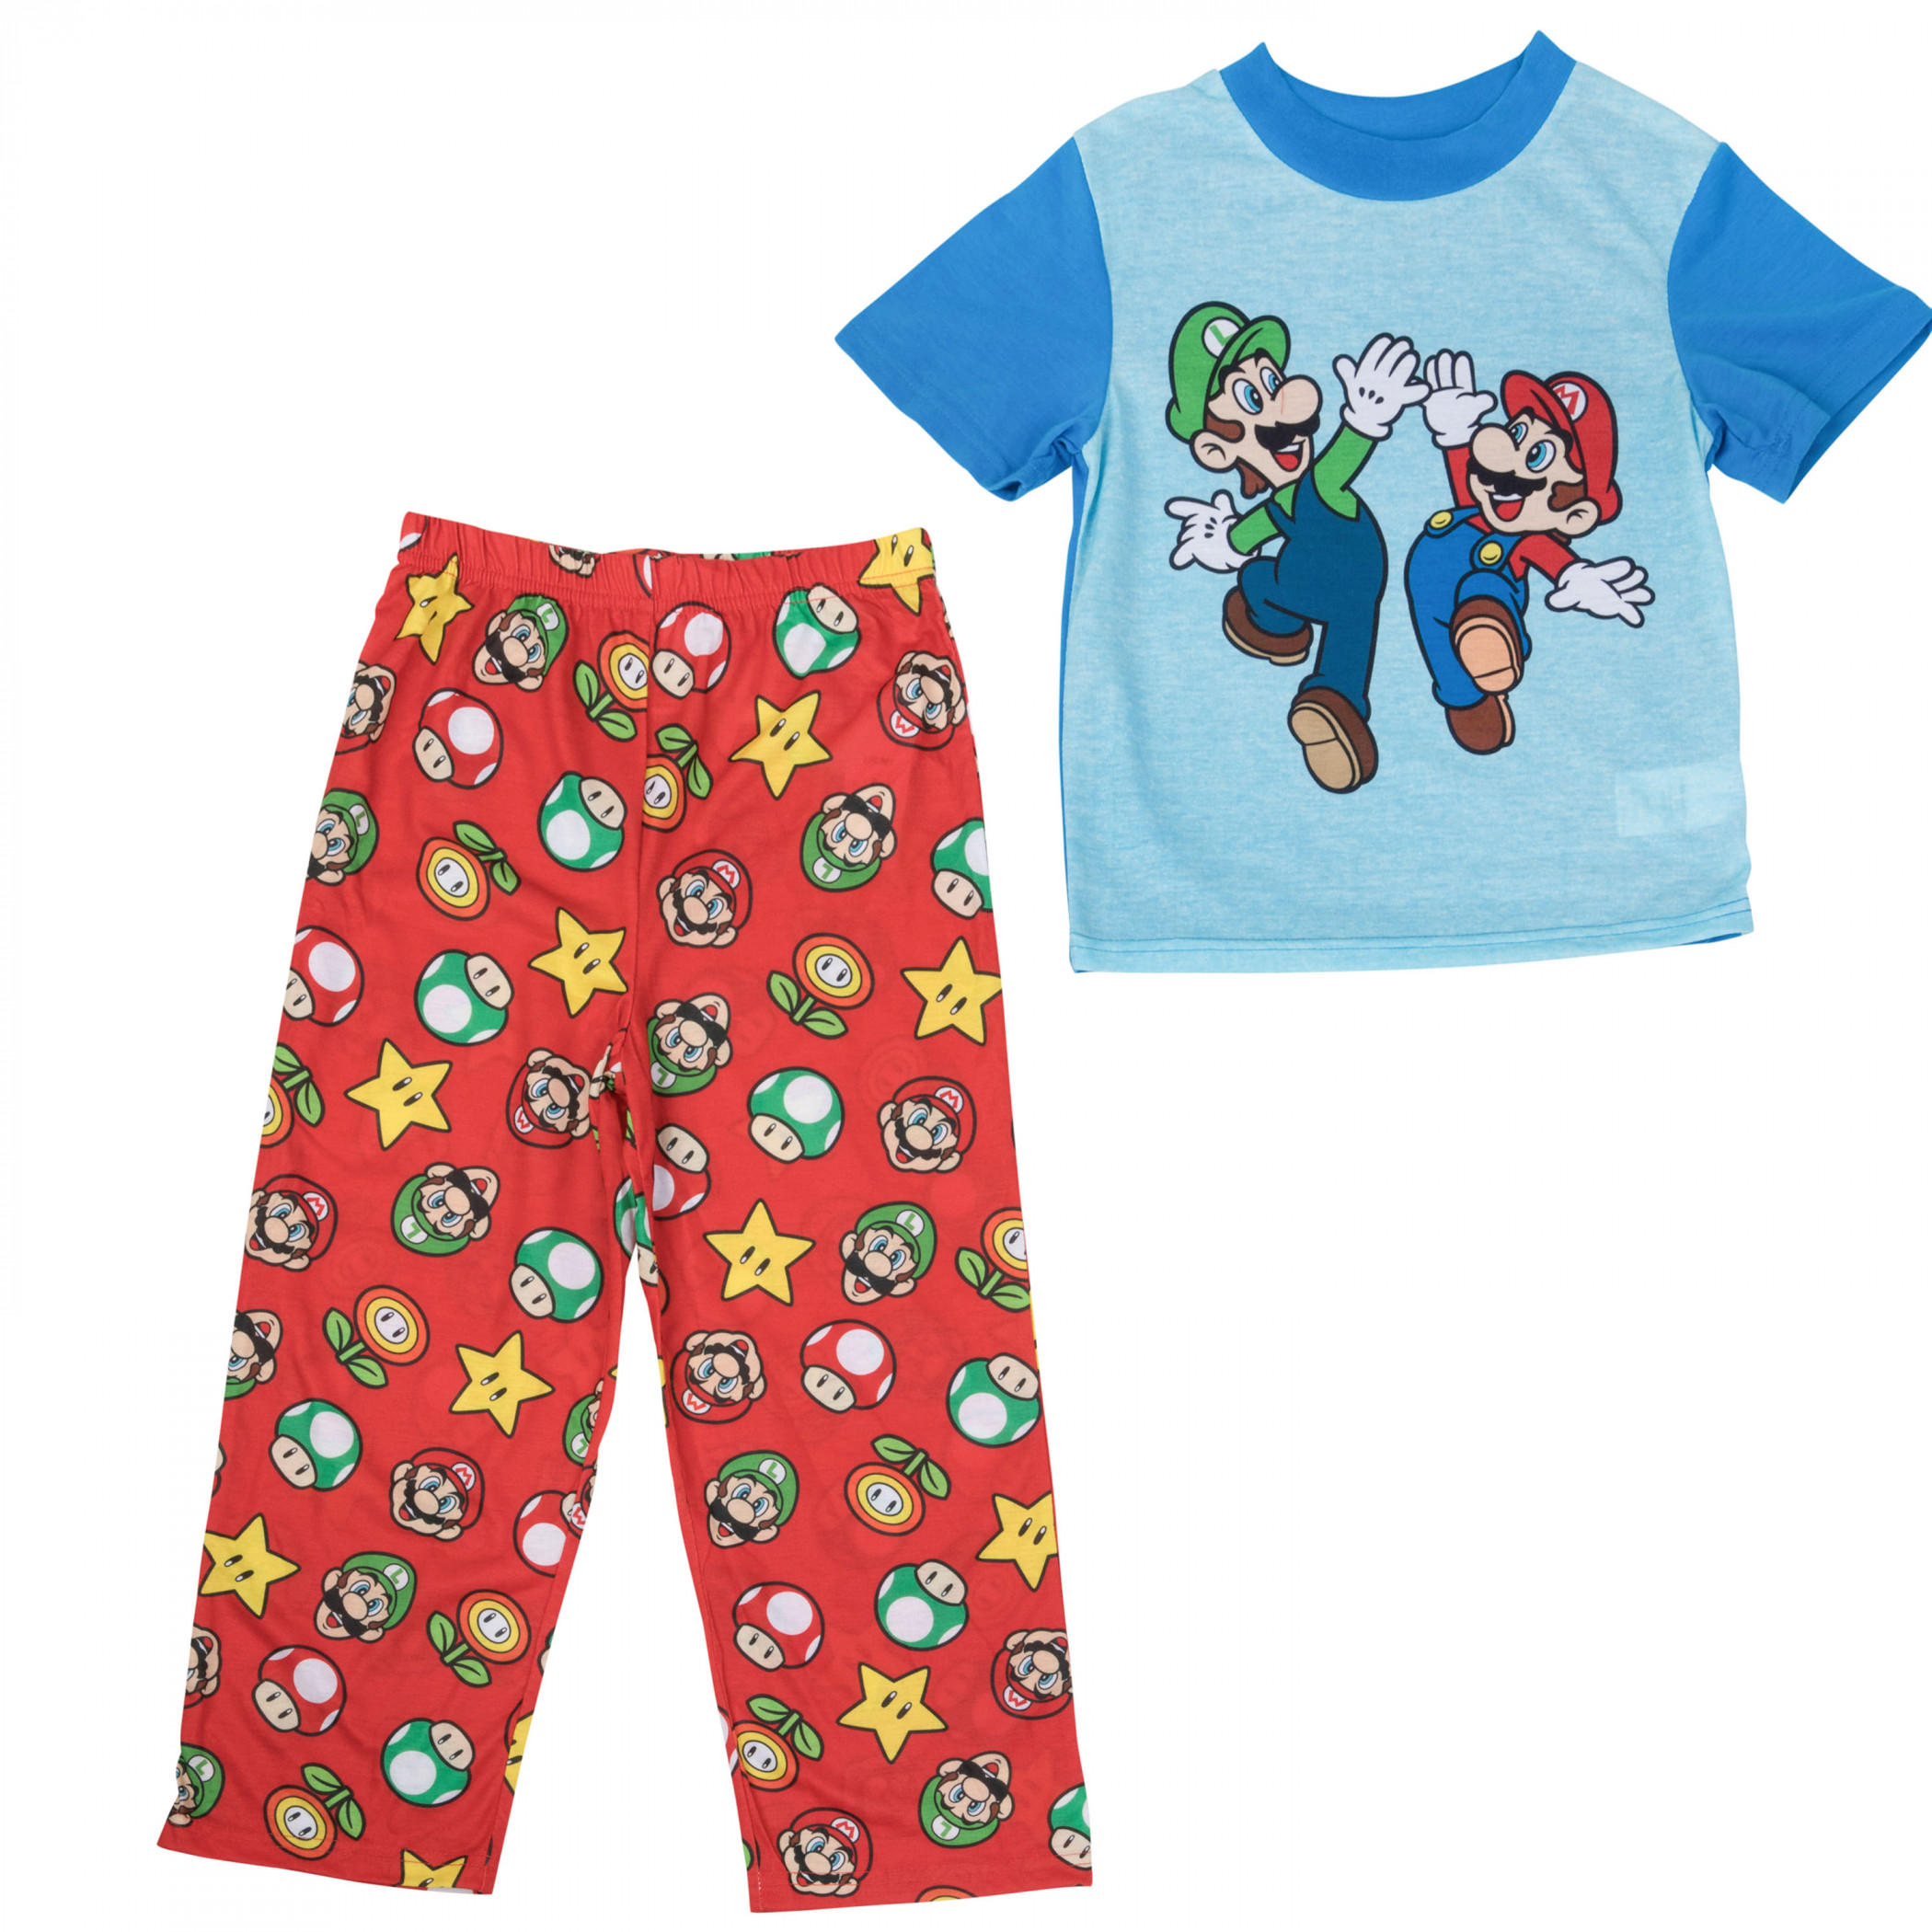 Super Mario Bros. High Five 2-Piece Pajama Set